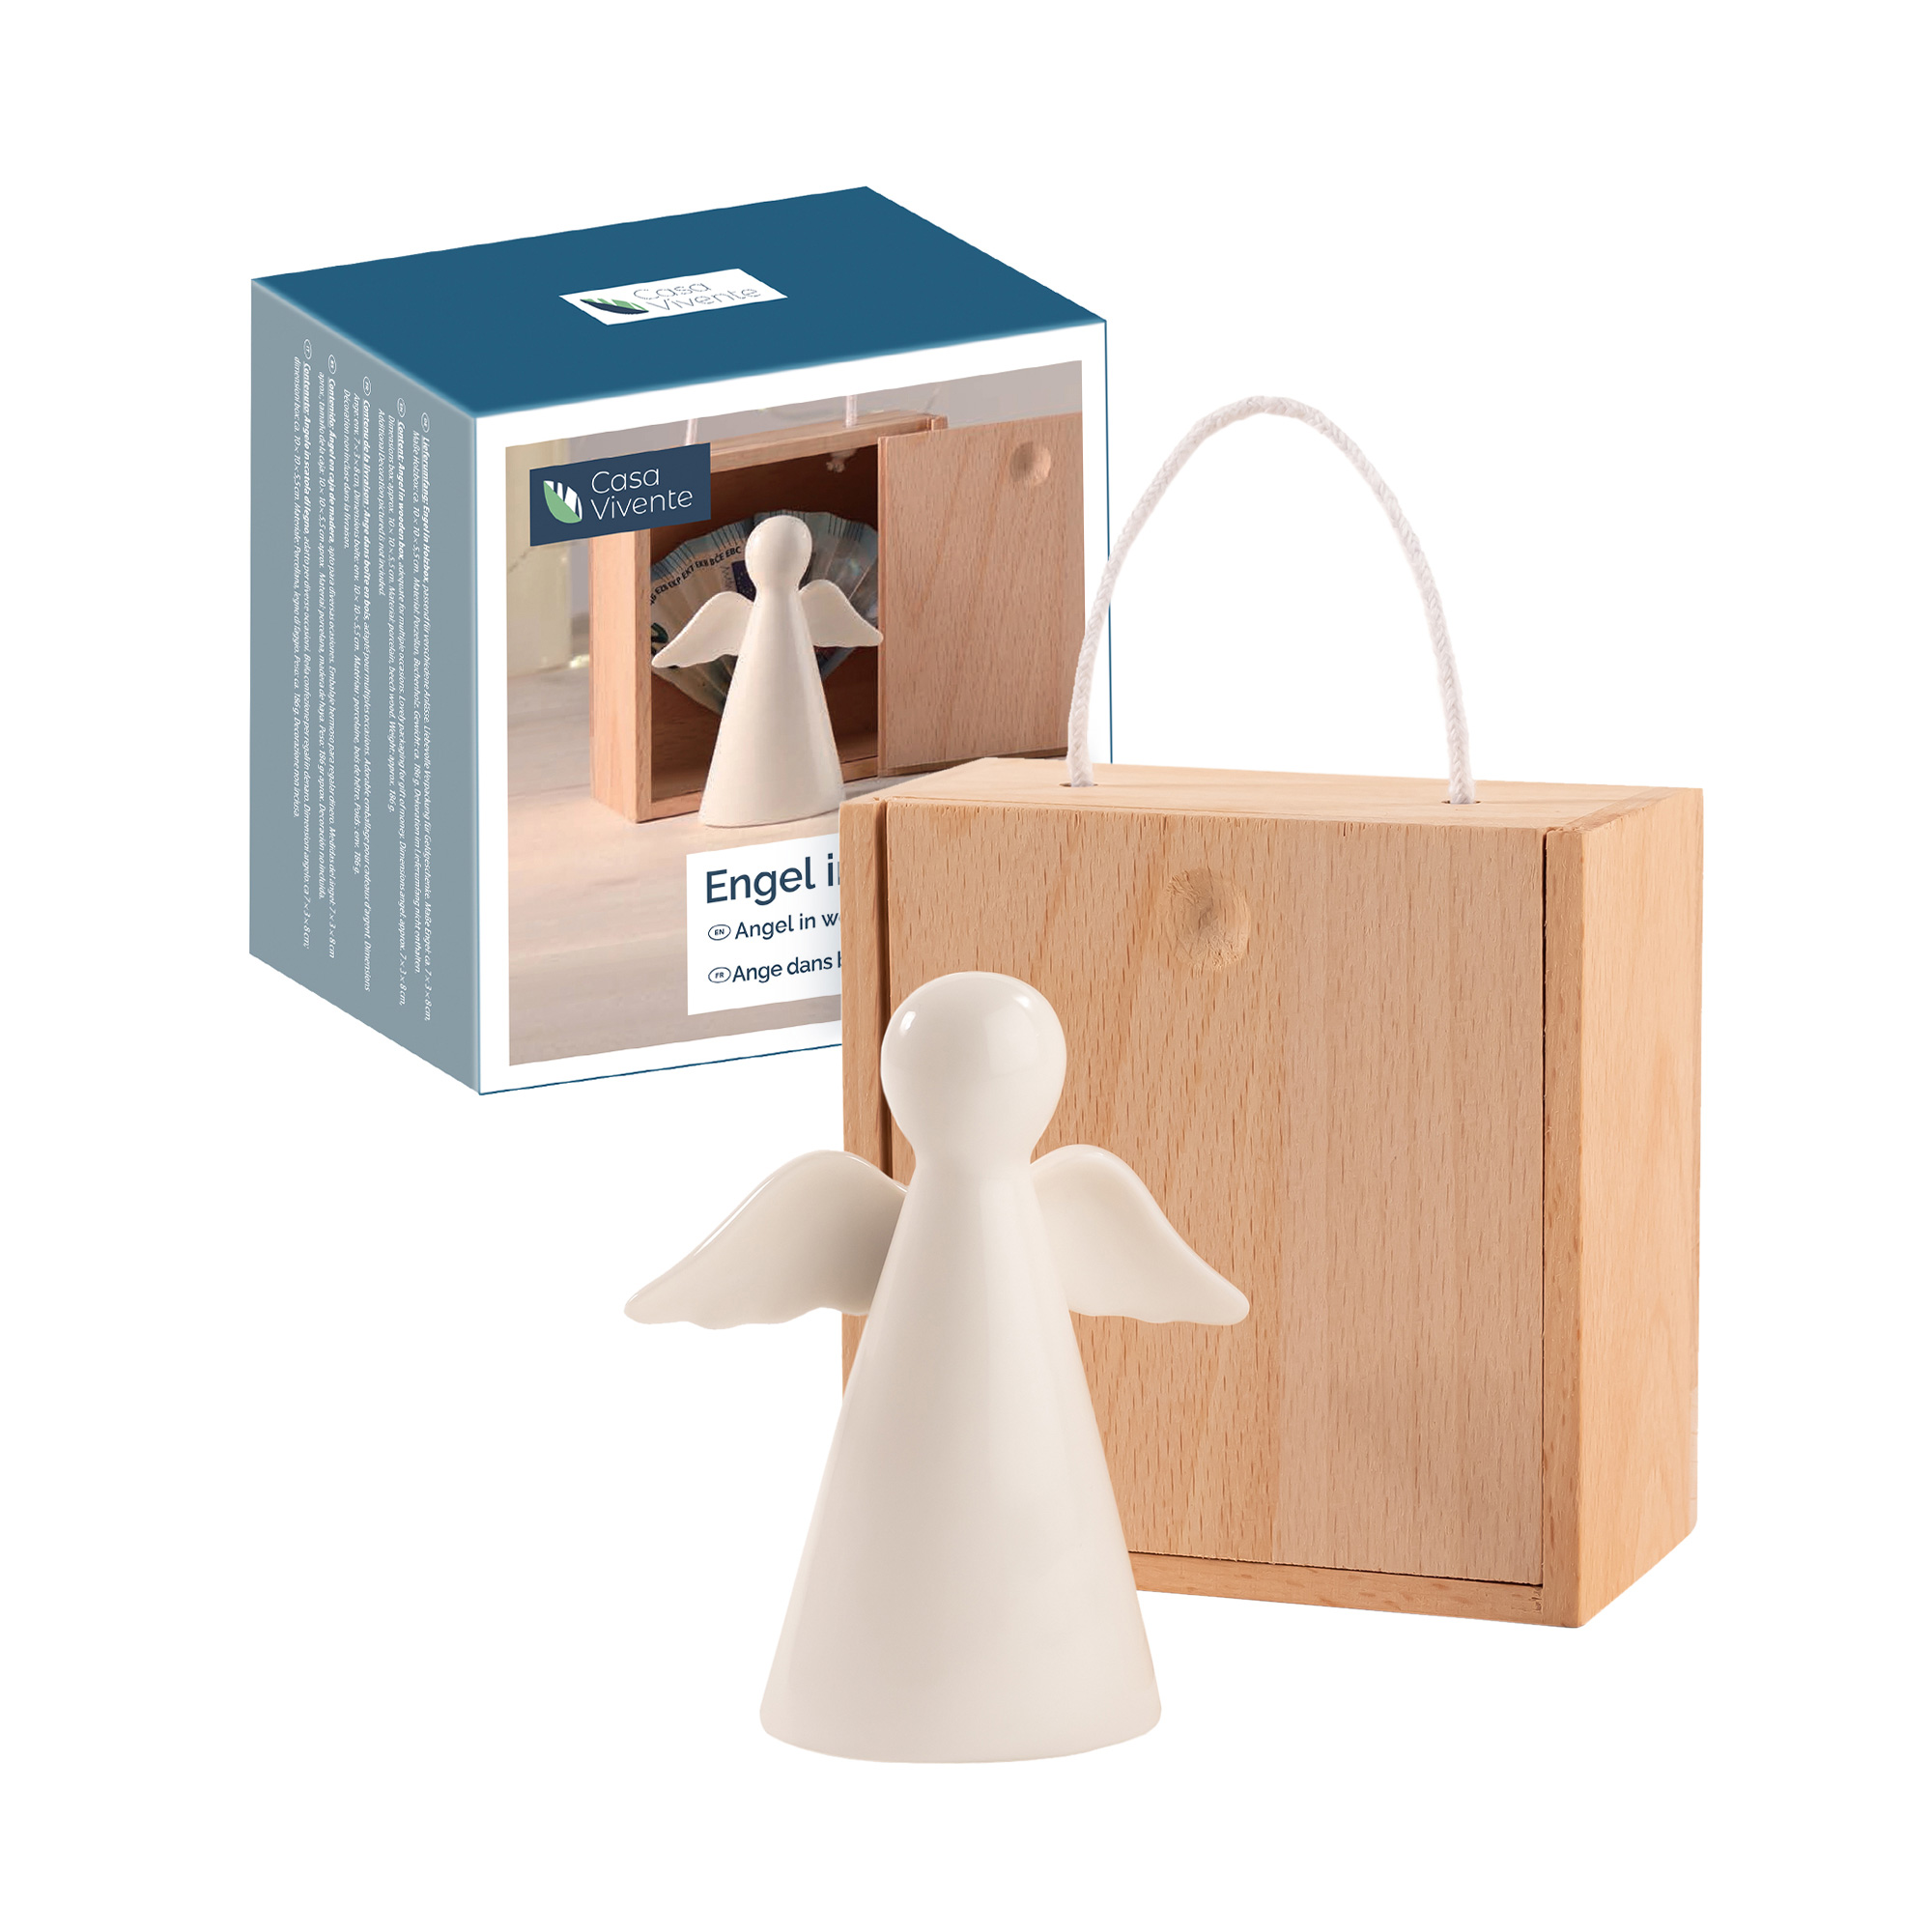 Porzellan Engel in Holzbox 0021-0006-EU-0000 - 4